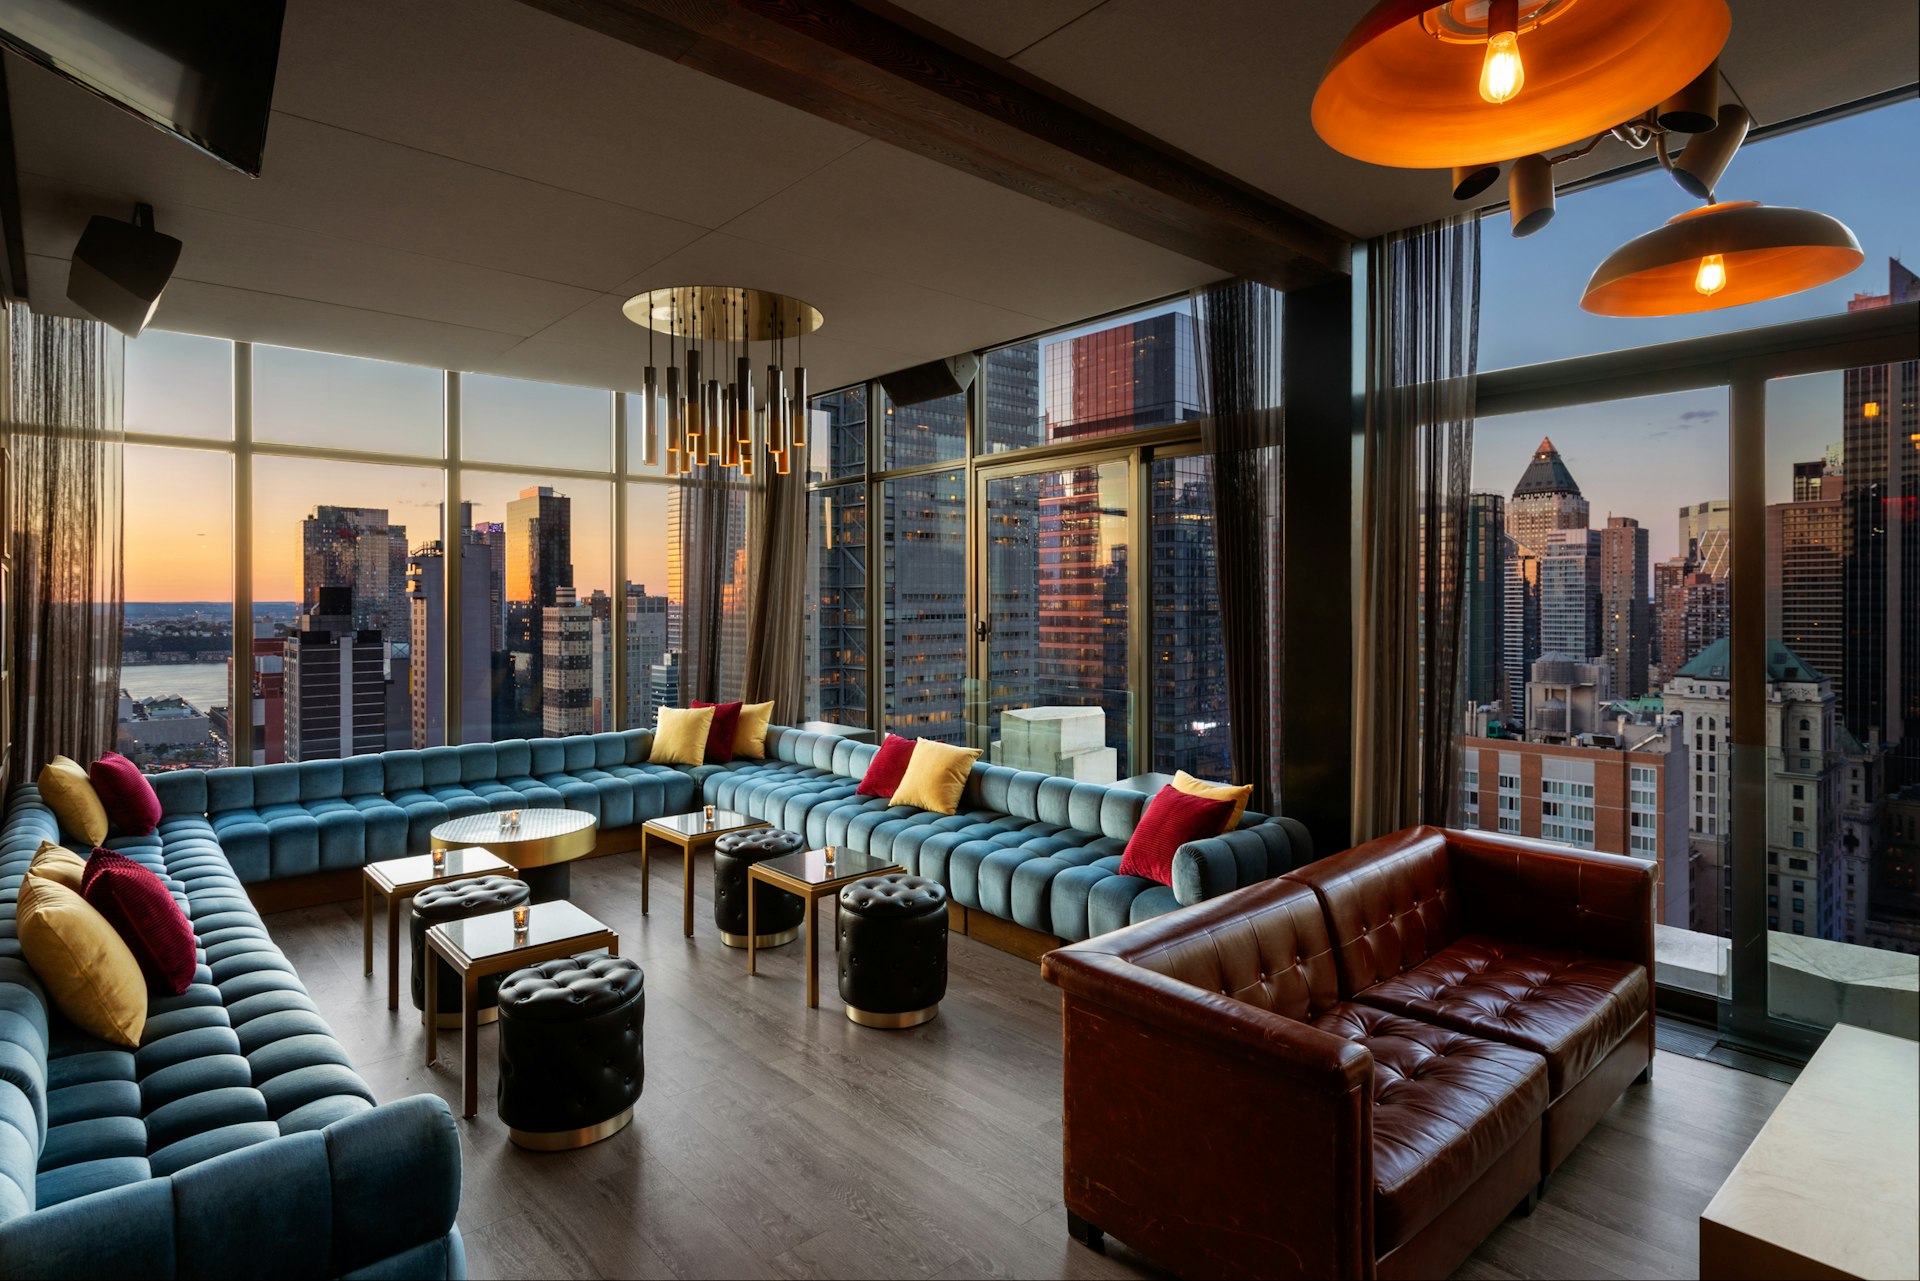 360-degree views of midtown NYC: The Skylark rooftop bar